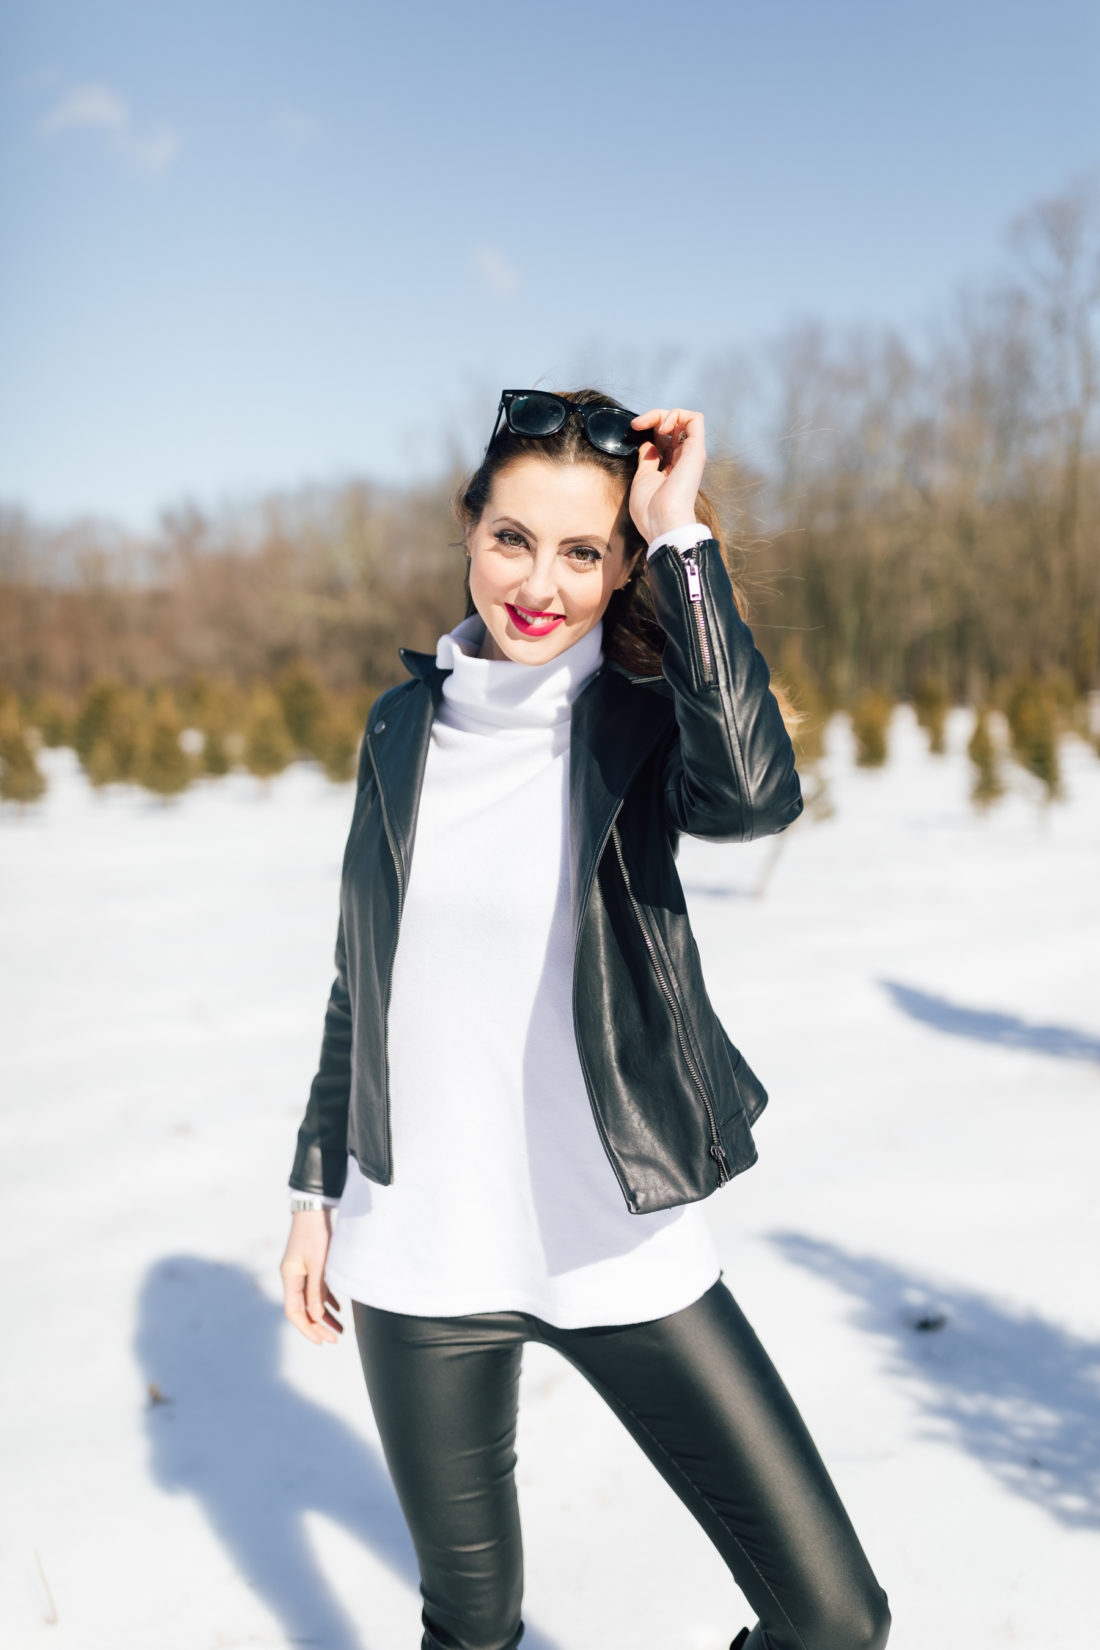 Eva Amurri Martino shares her spring fashion favorites